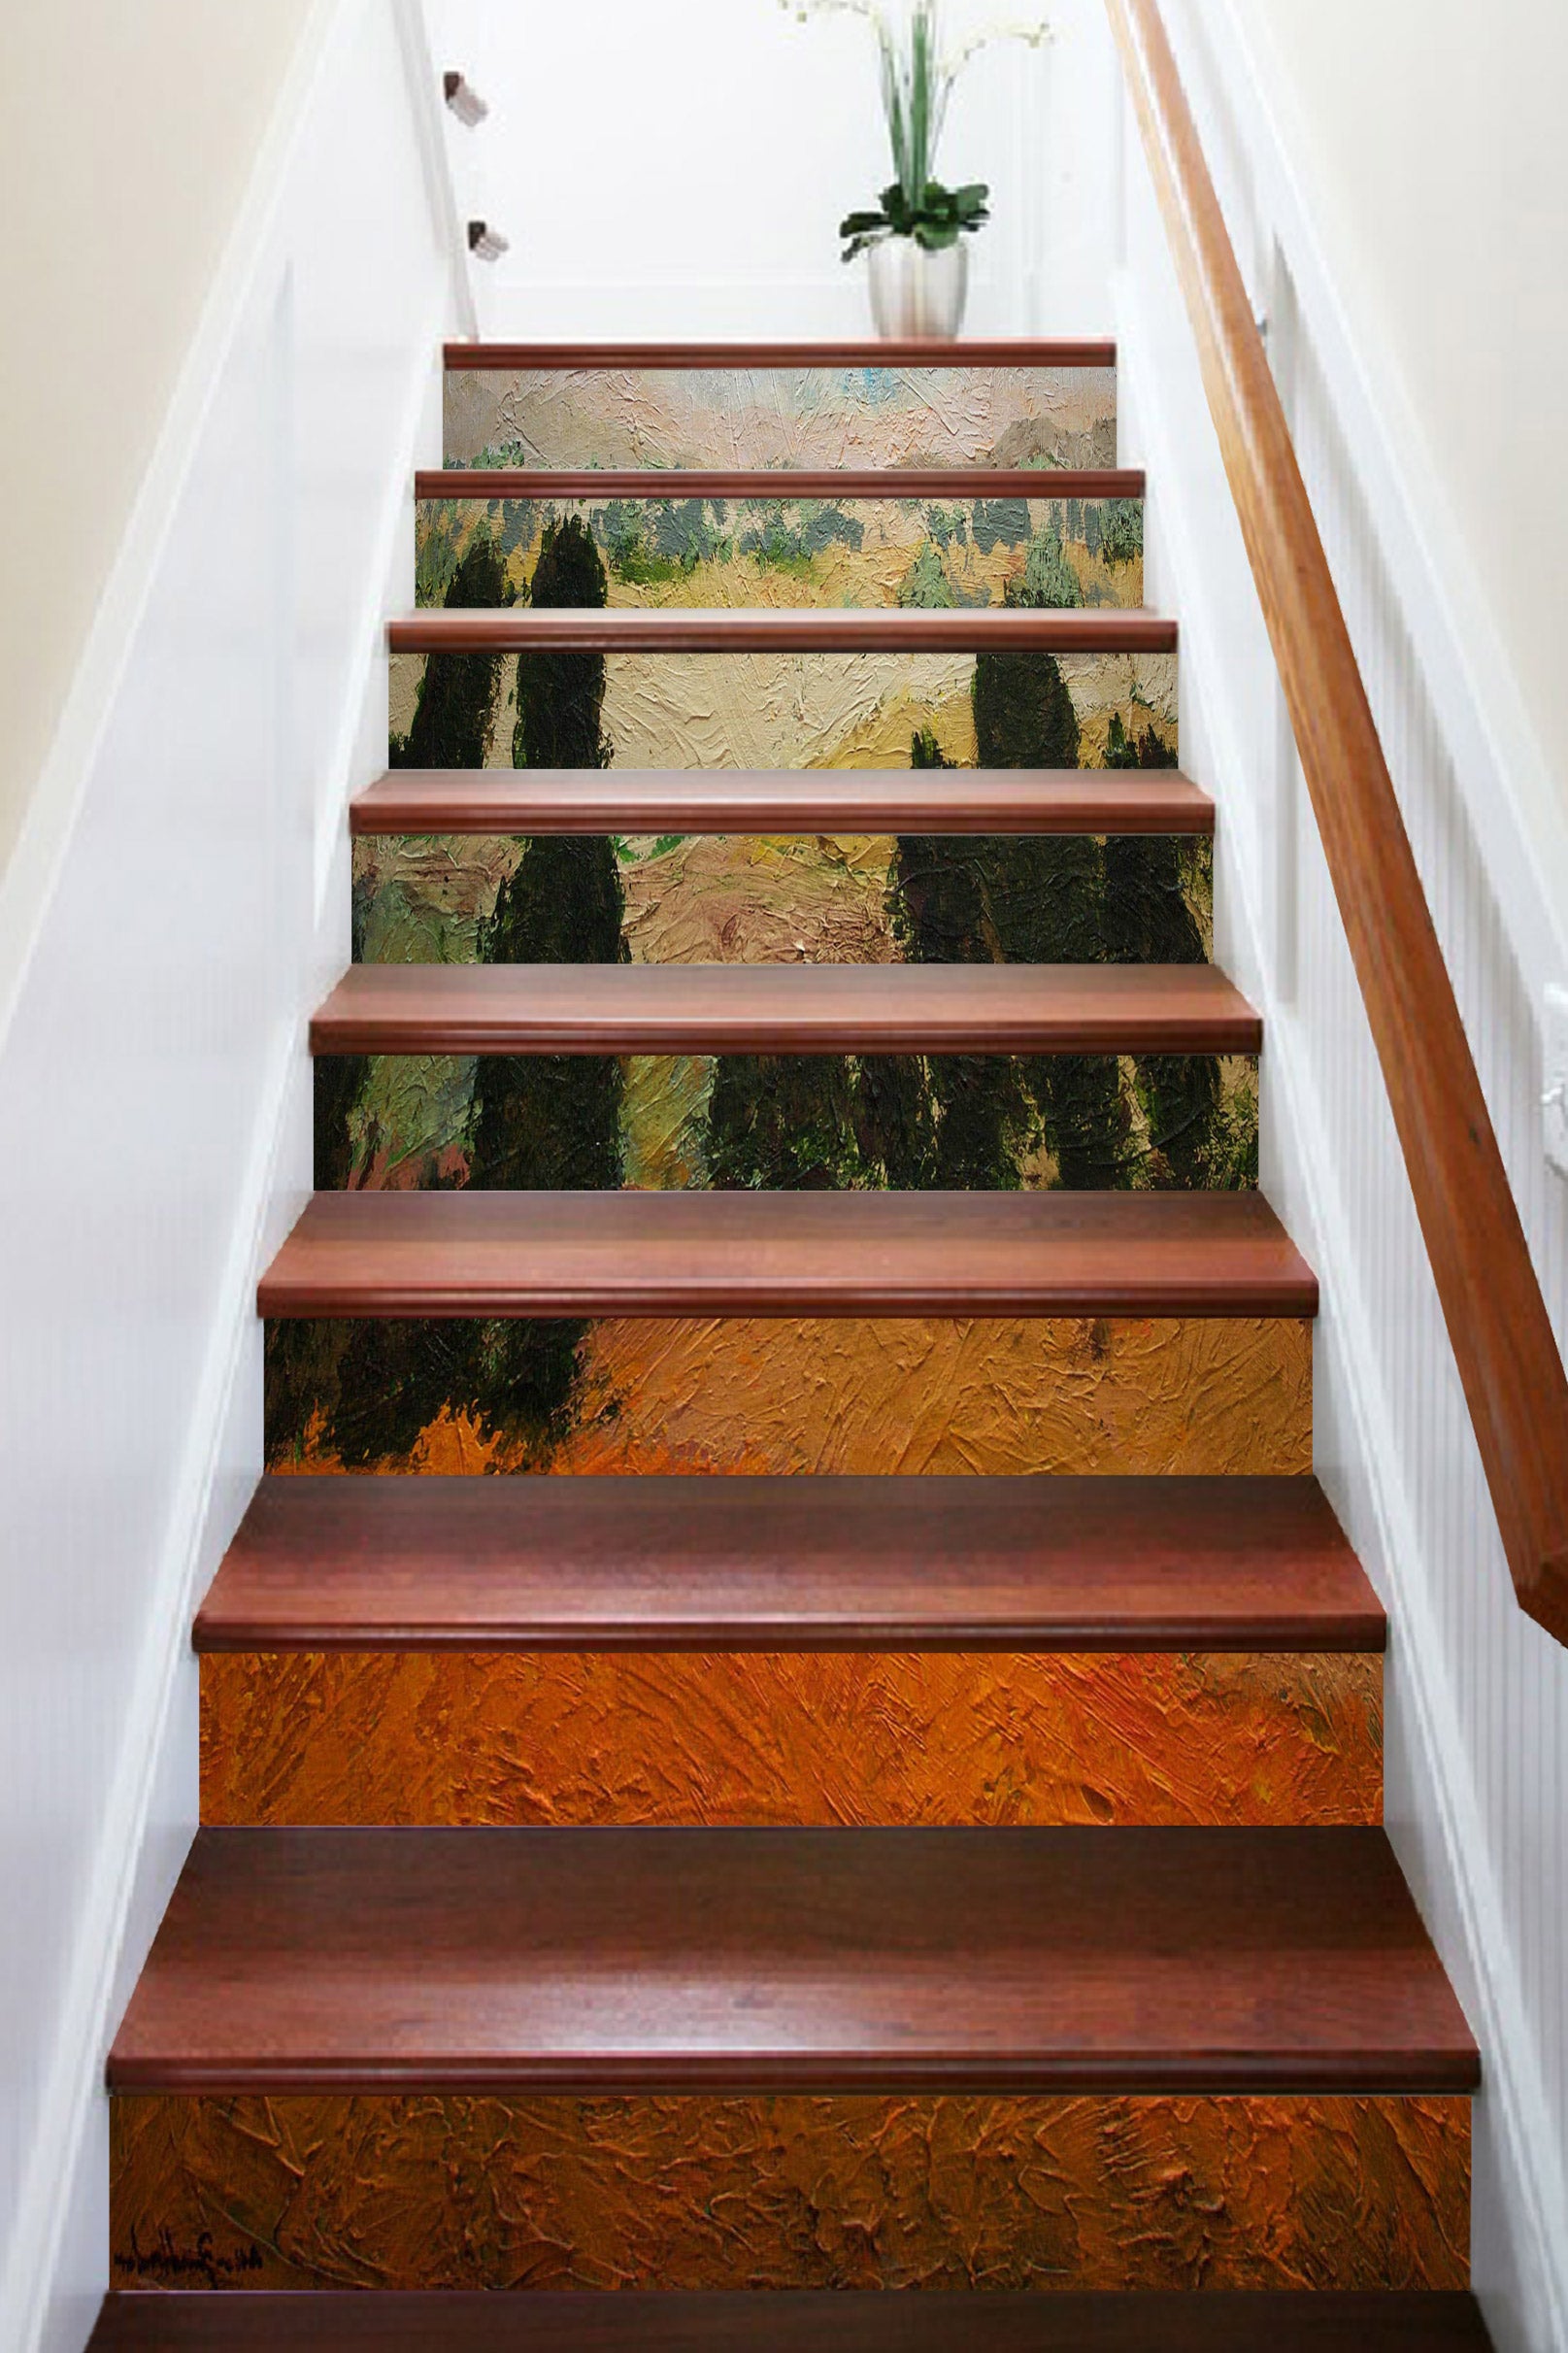 3D Tree Scene Oil Painting 90170 Allan P. Friedlander Stair Risers